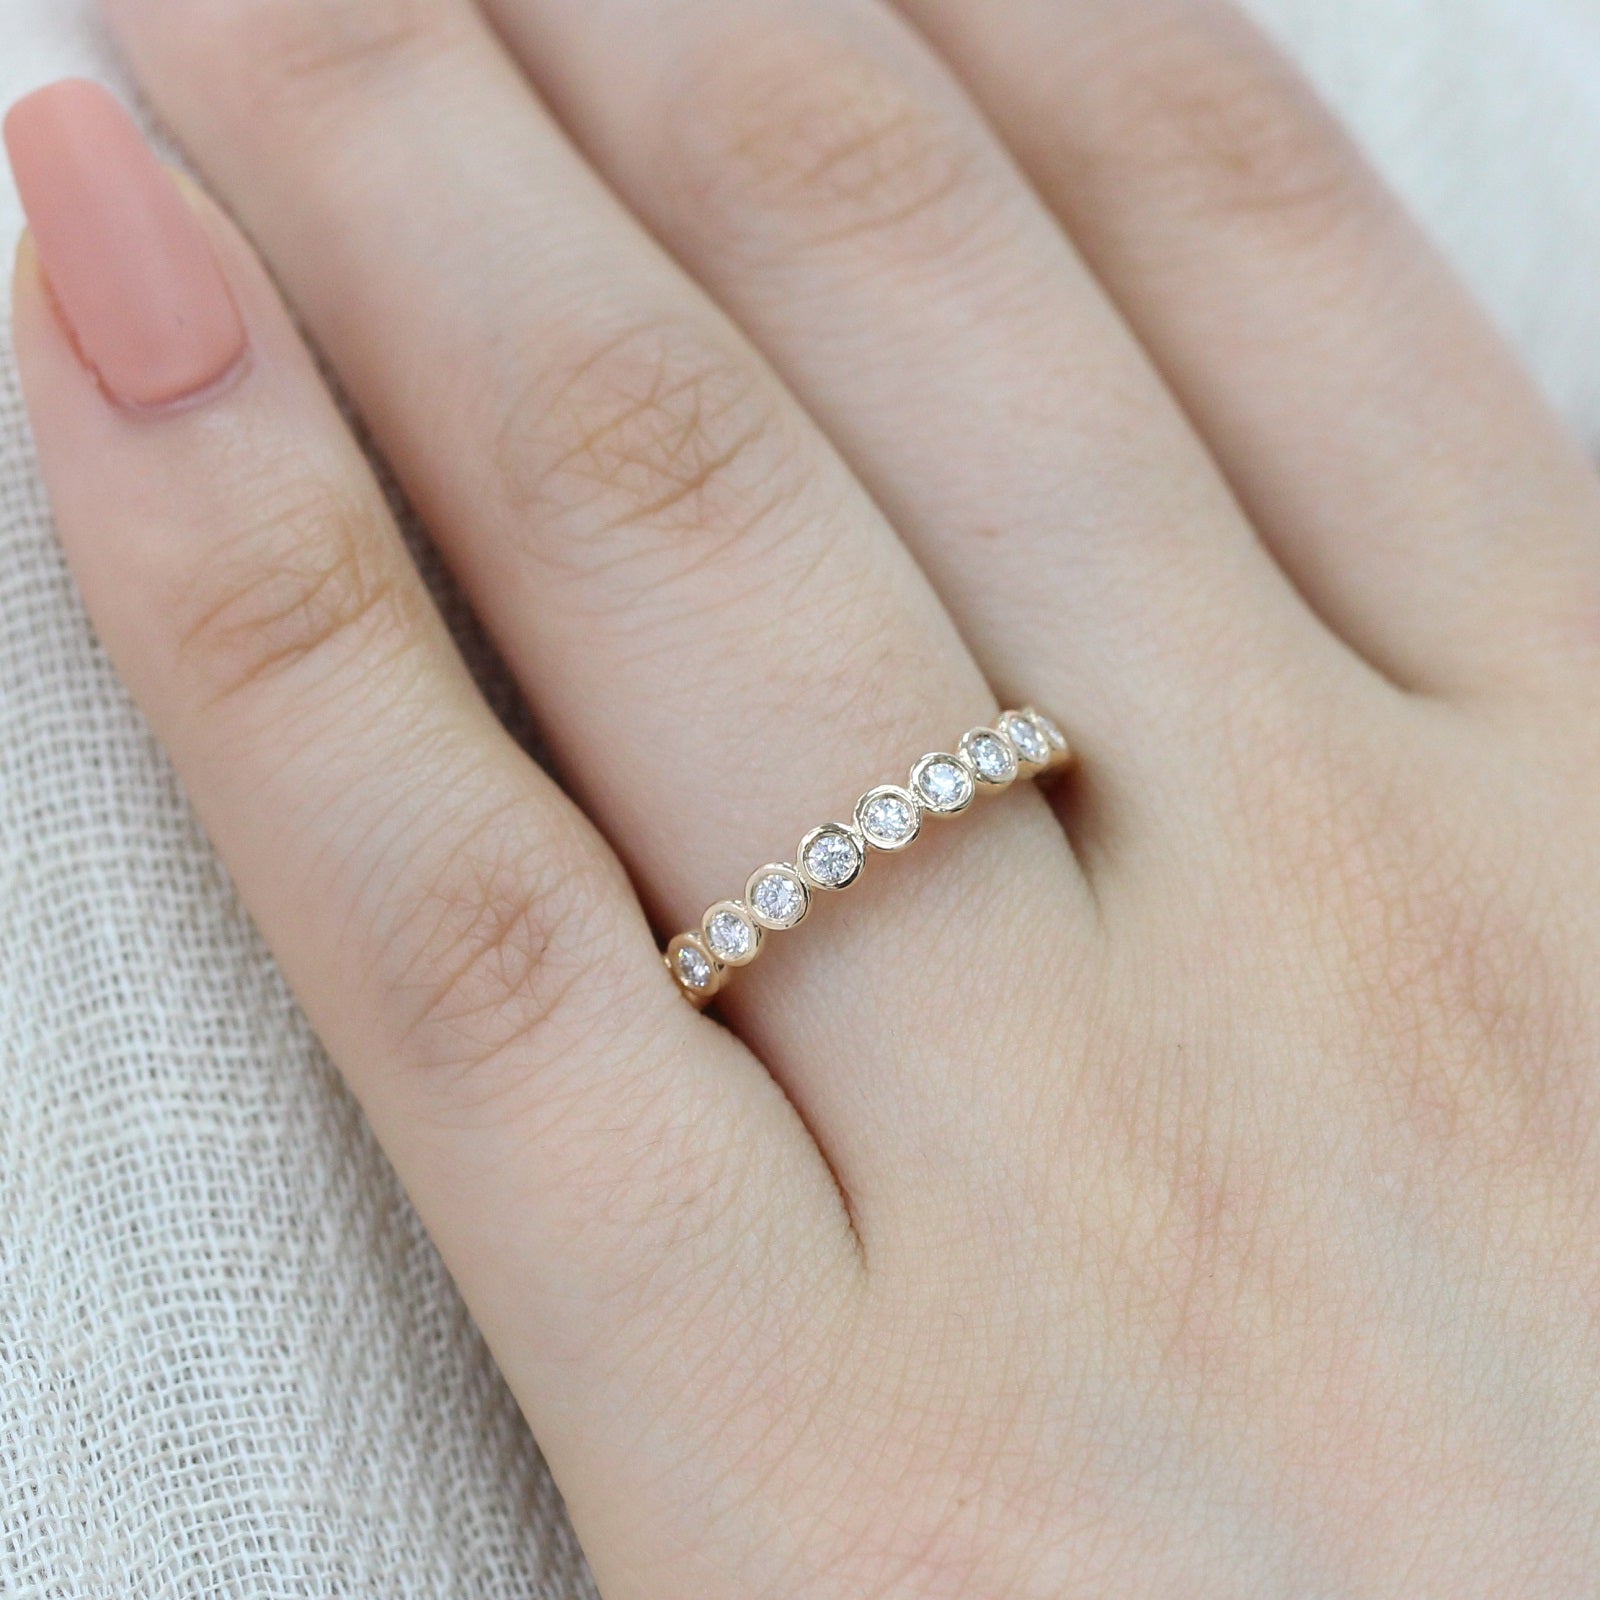 Bezel Set Diamond Wedding Ring in 14k Yellow Gold Half Eternity Band, Size 6.5